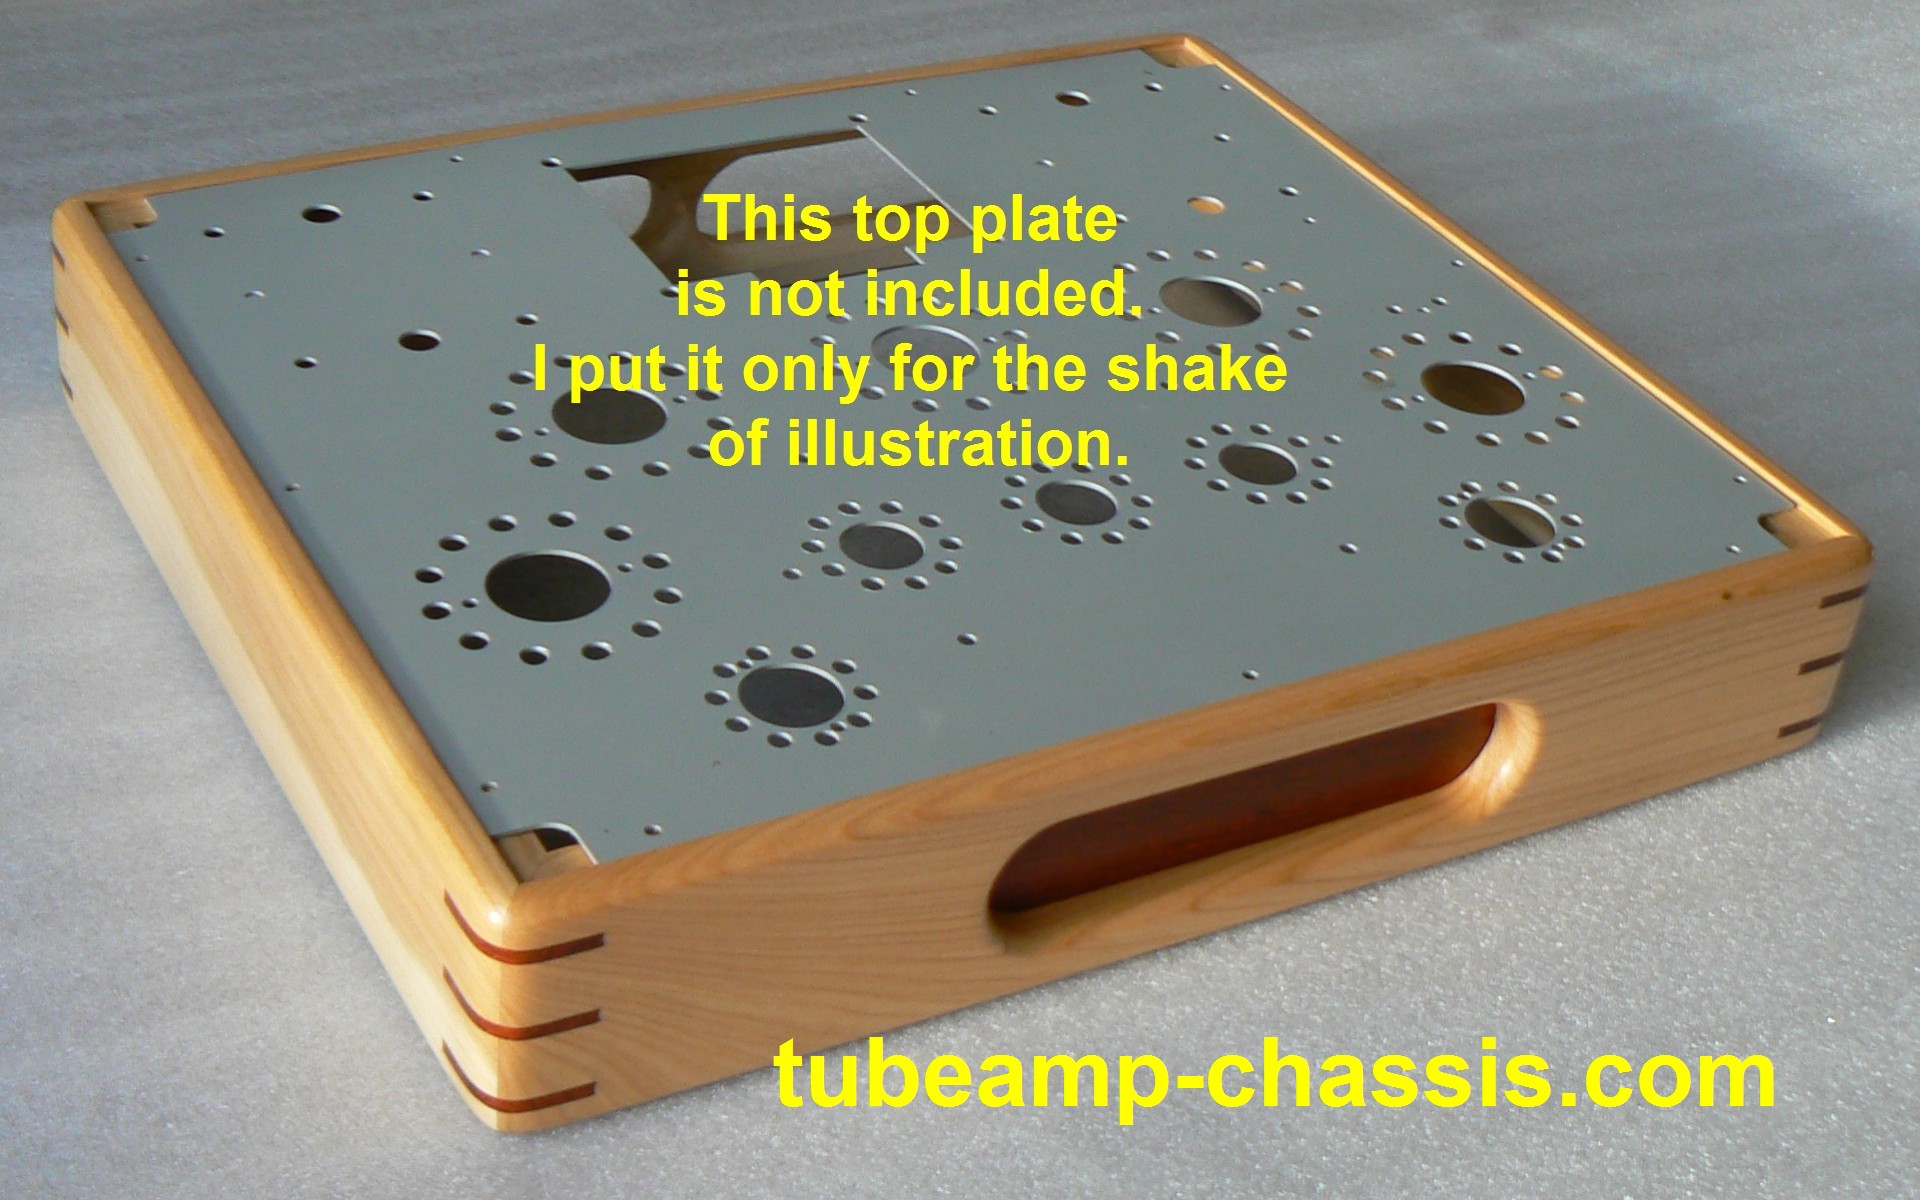 tubeamp_chassis-2.jpg